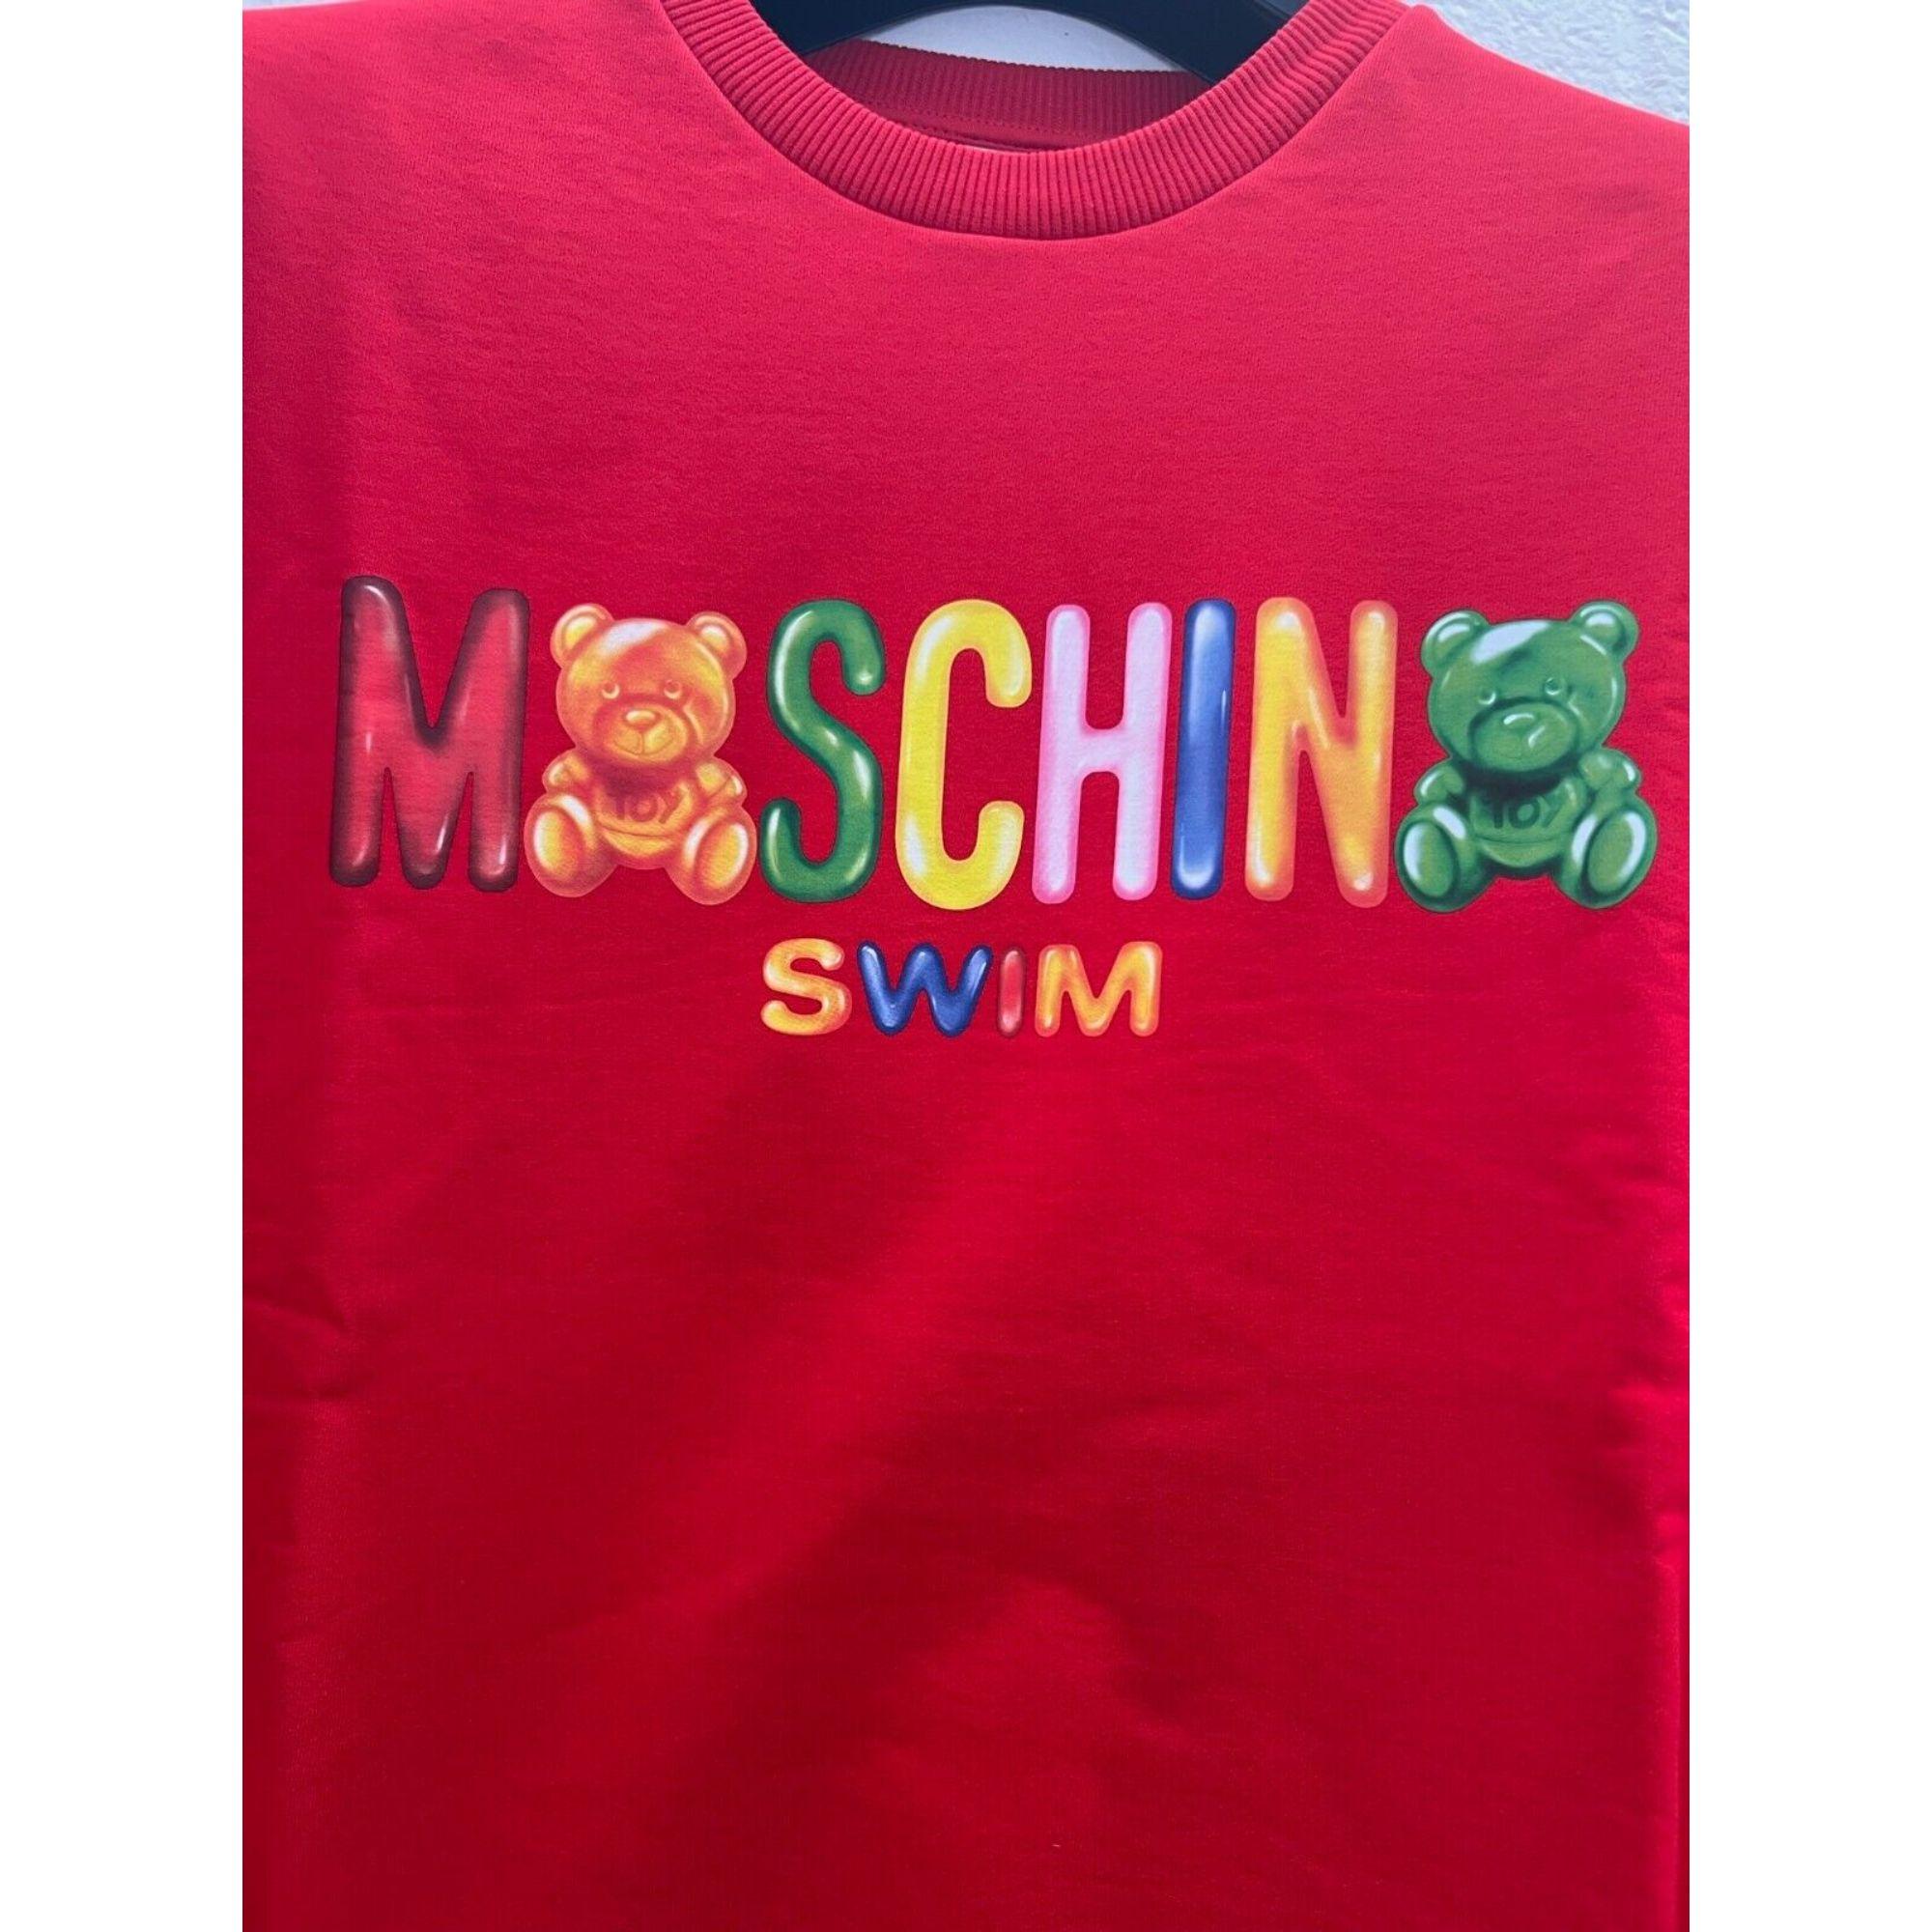 SS19 Moschino Swim Jelly Gummy Teddy Bear Sweatshirt by Jeremy Scott, Size XL In New Condition For Sale In Palm Springs, CA